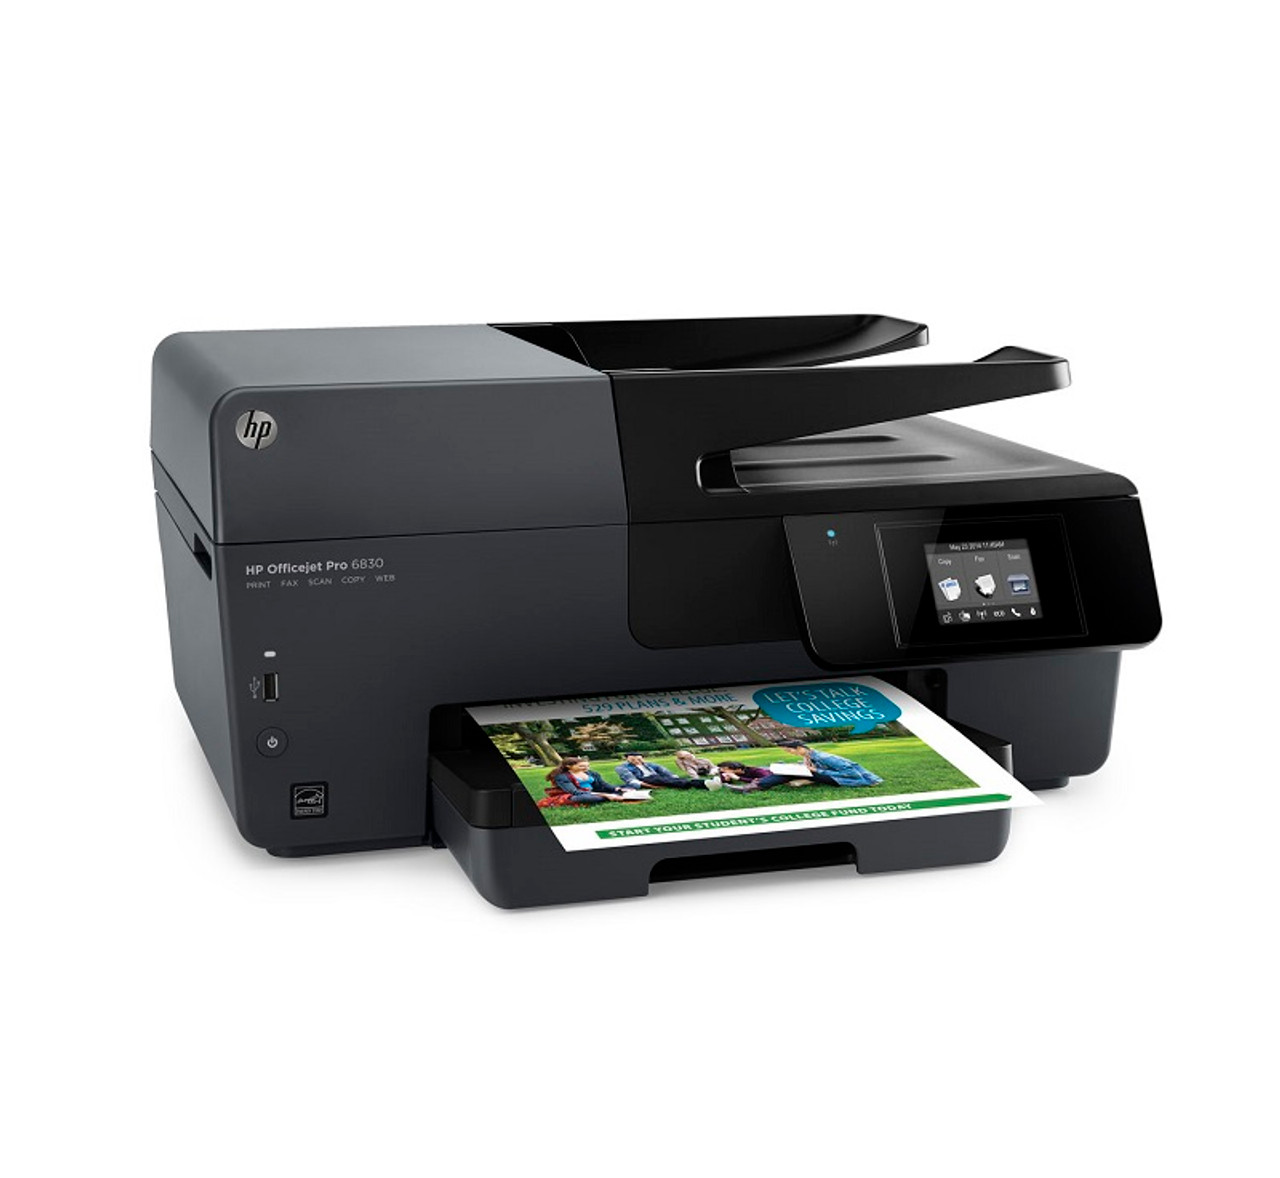 Part No:E3E02A#B1H - HP OfficeJet Pro 6830 All-in-One Color Photo Printer with Wireless & Mobile Printing